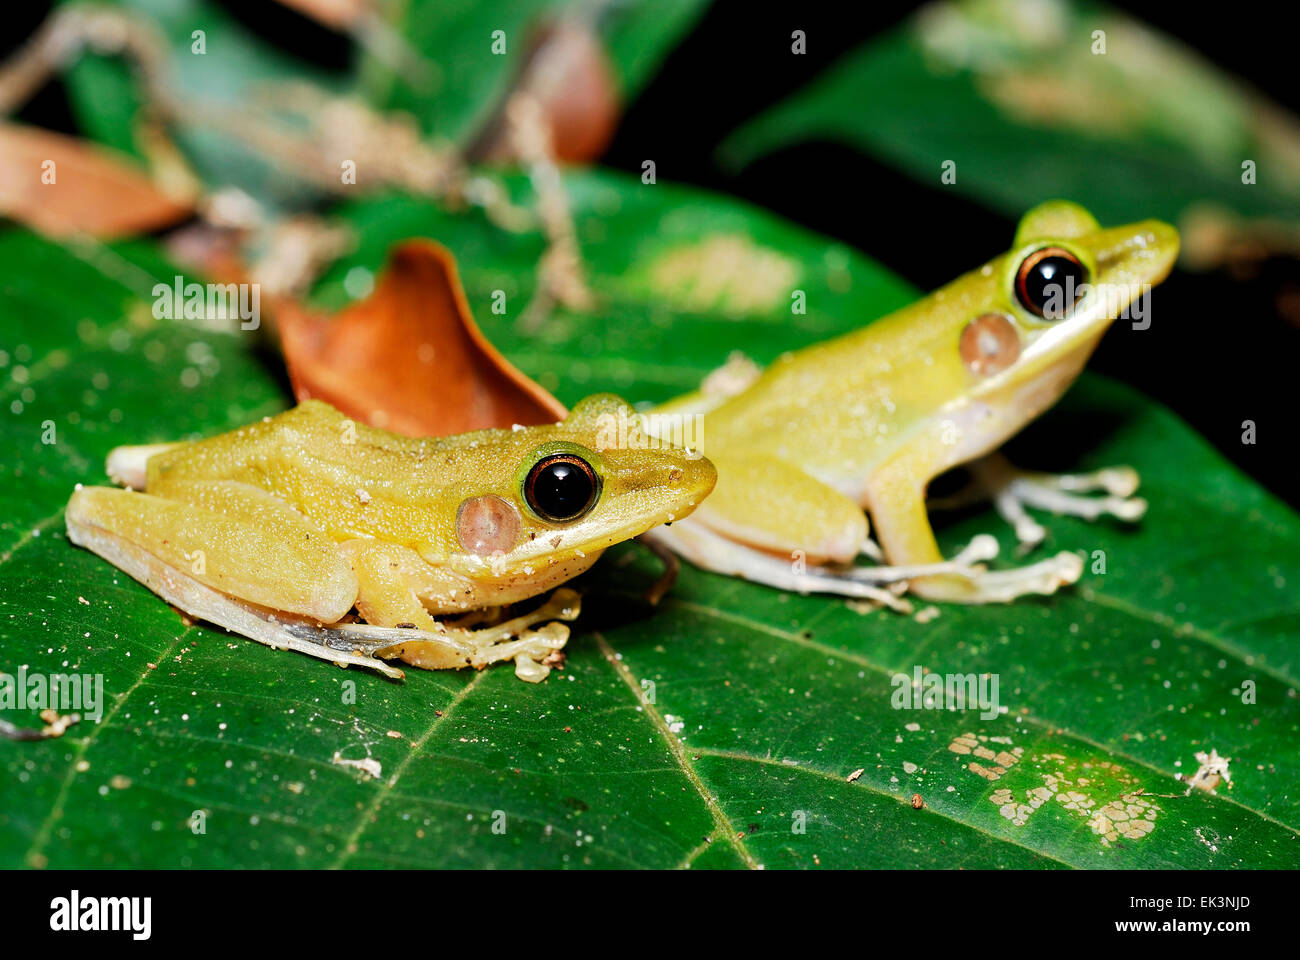 Hylarana raniceps (grenouille verte) sur une feuille verte de Kubah, Sarawak, Malaisie, Bornéo Banque D'Images